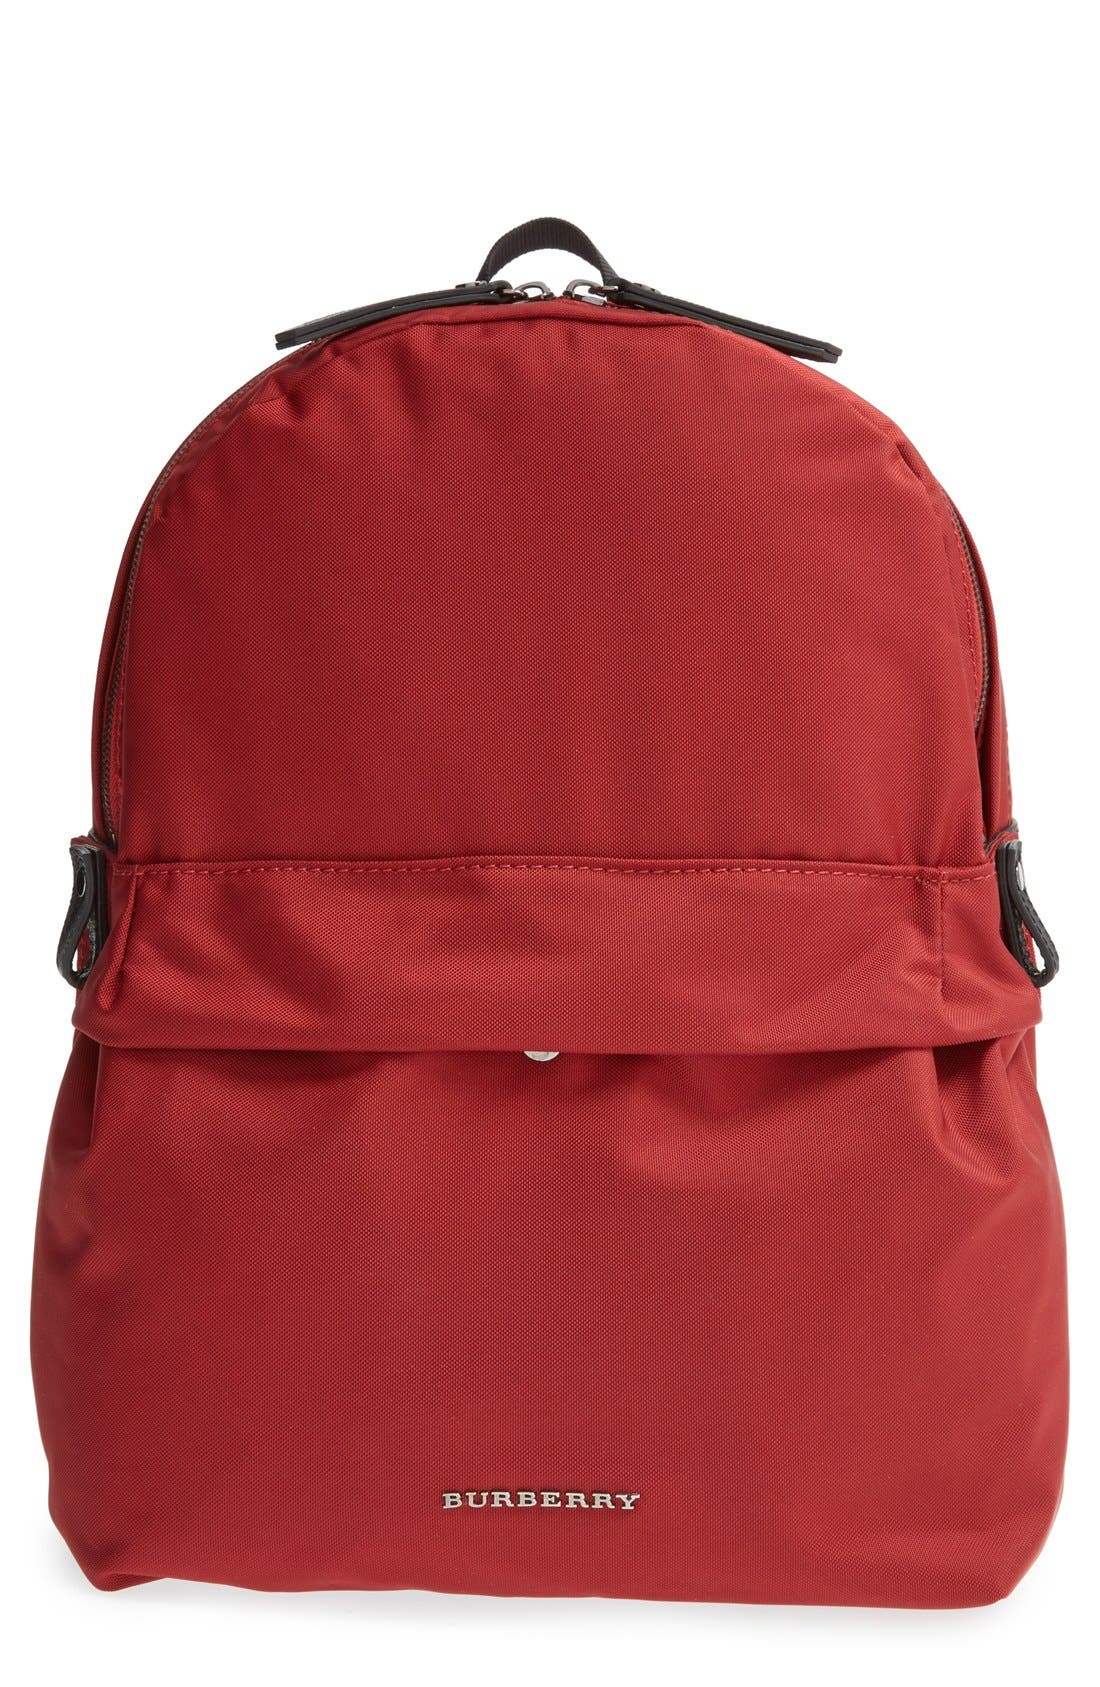 burberry backpack nordstrom